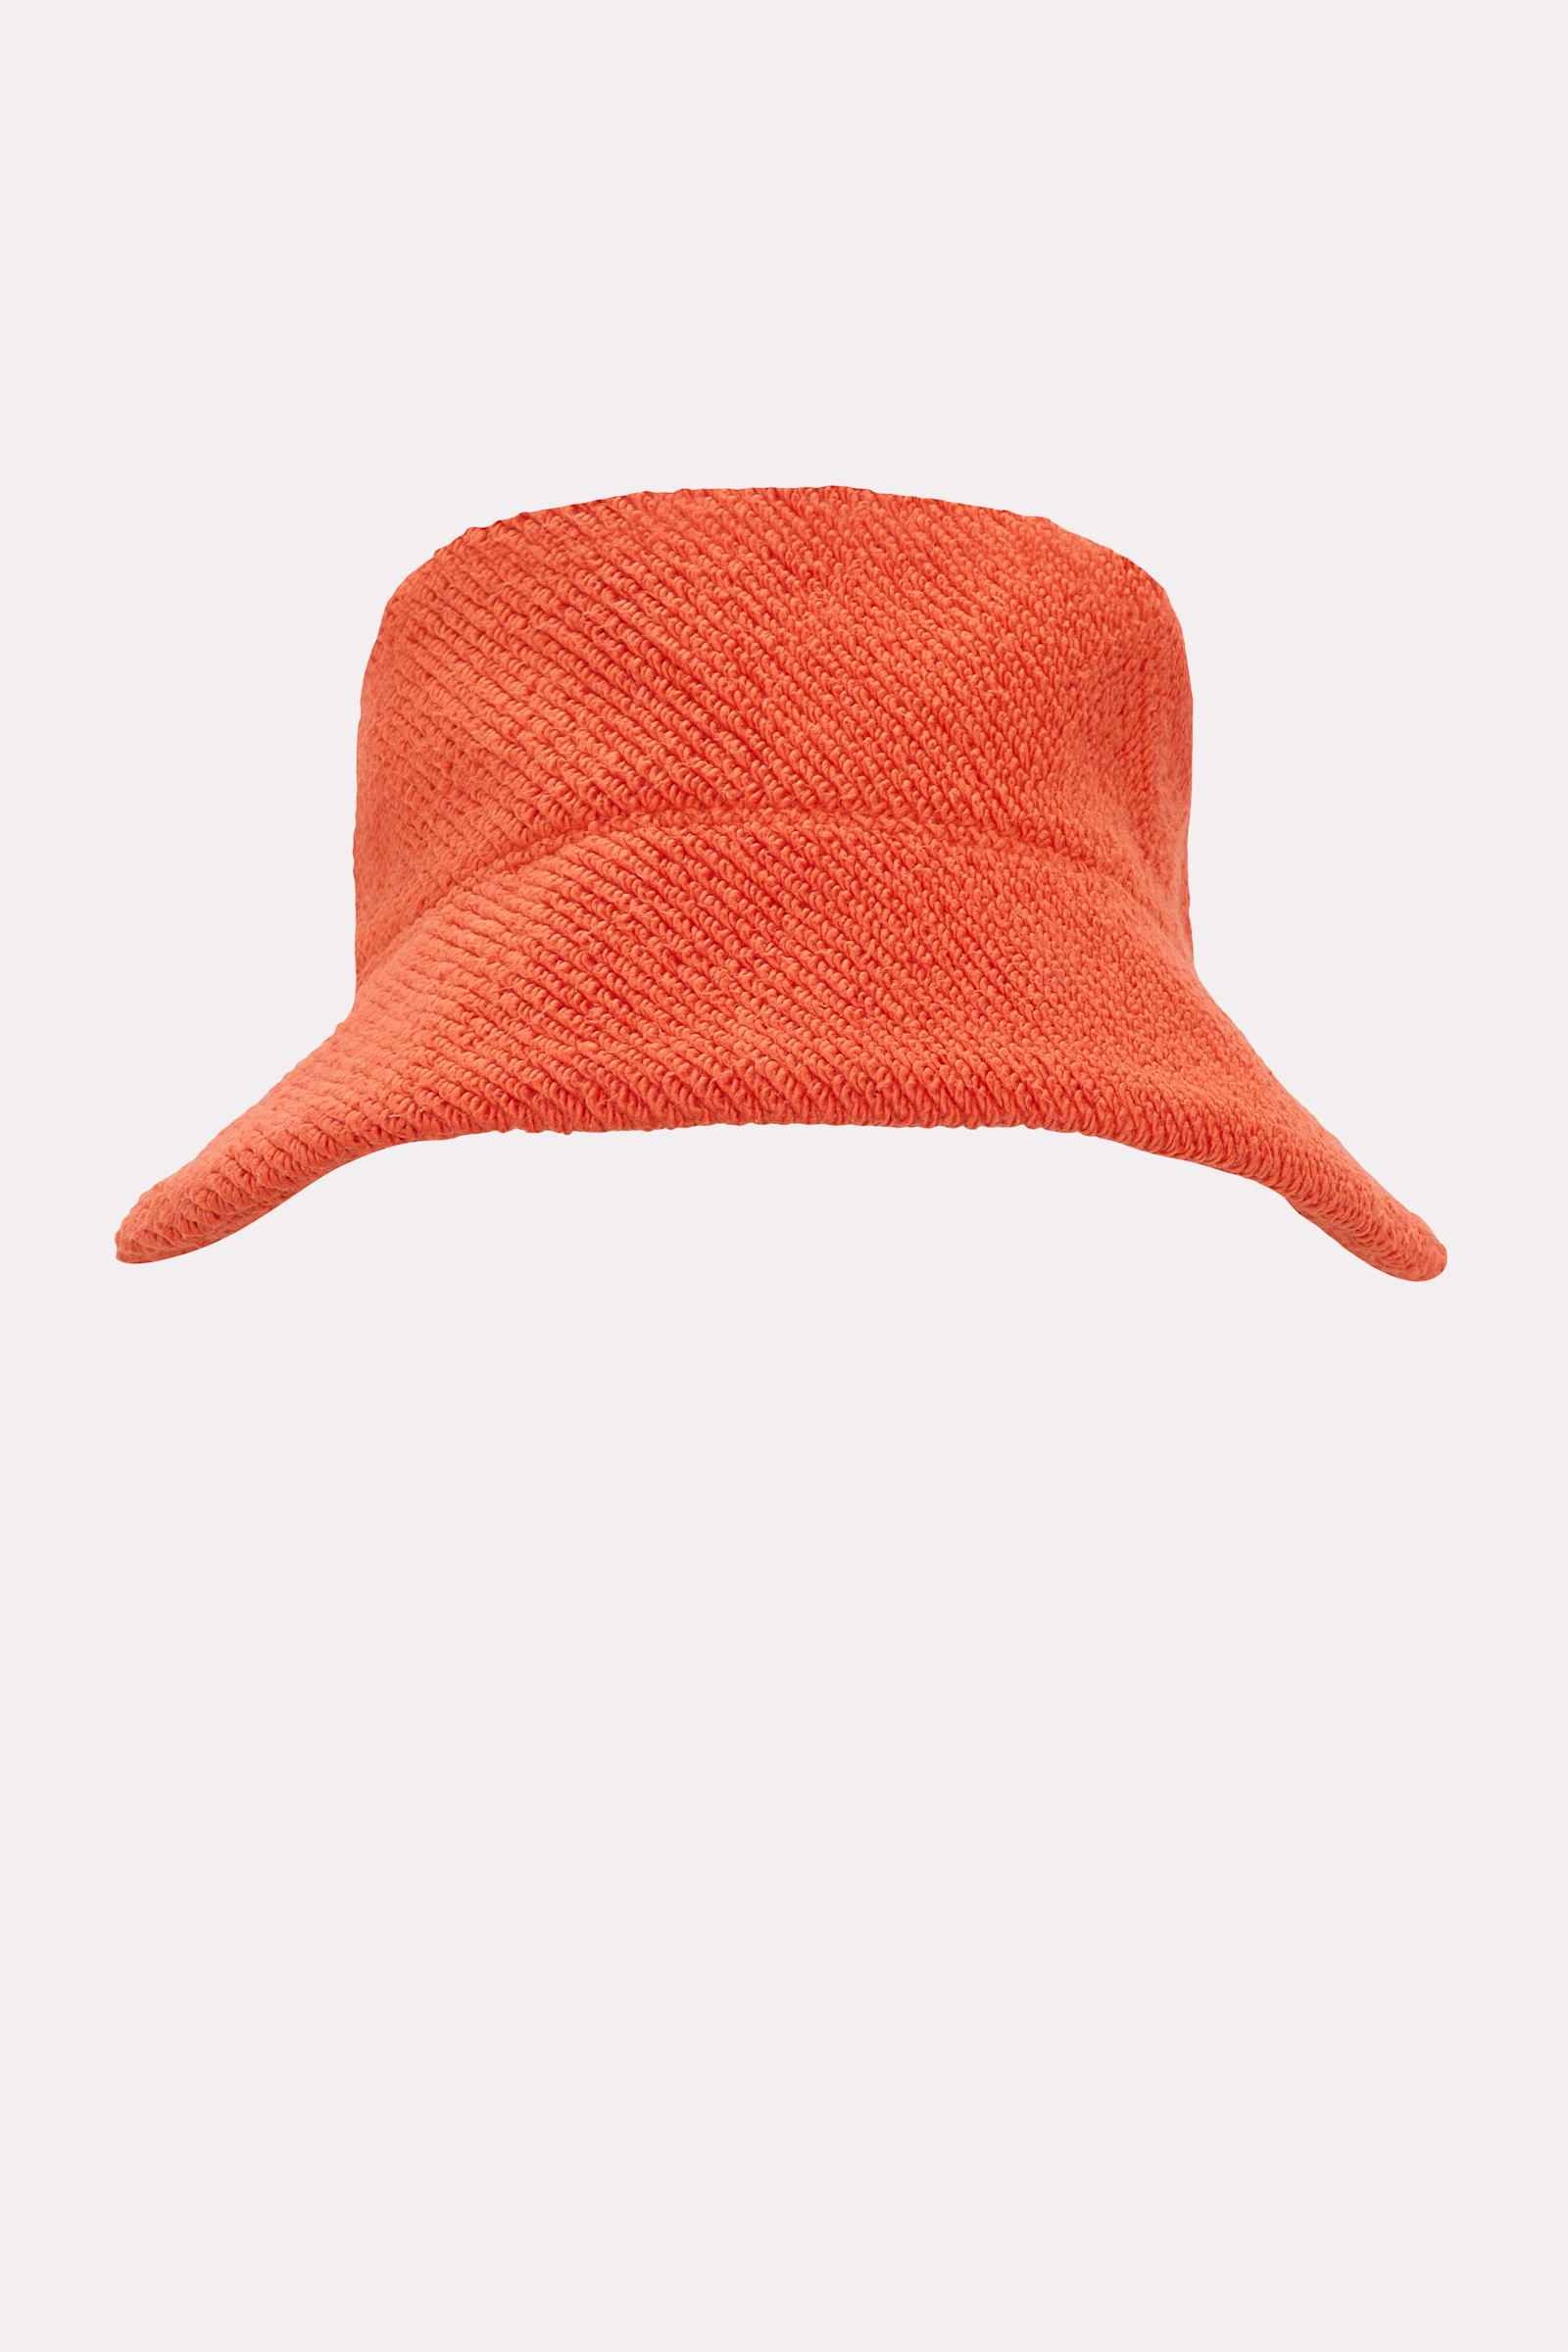 MODERN TOWELLING hat